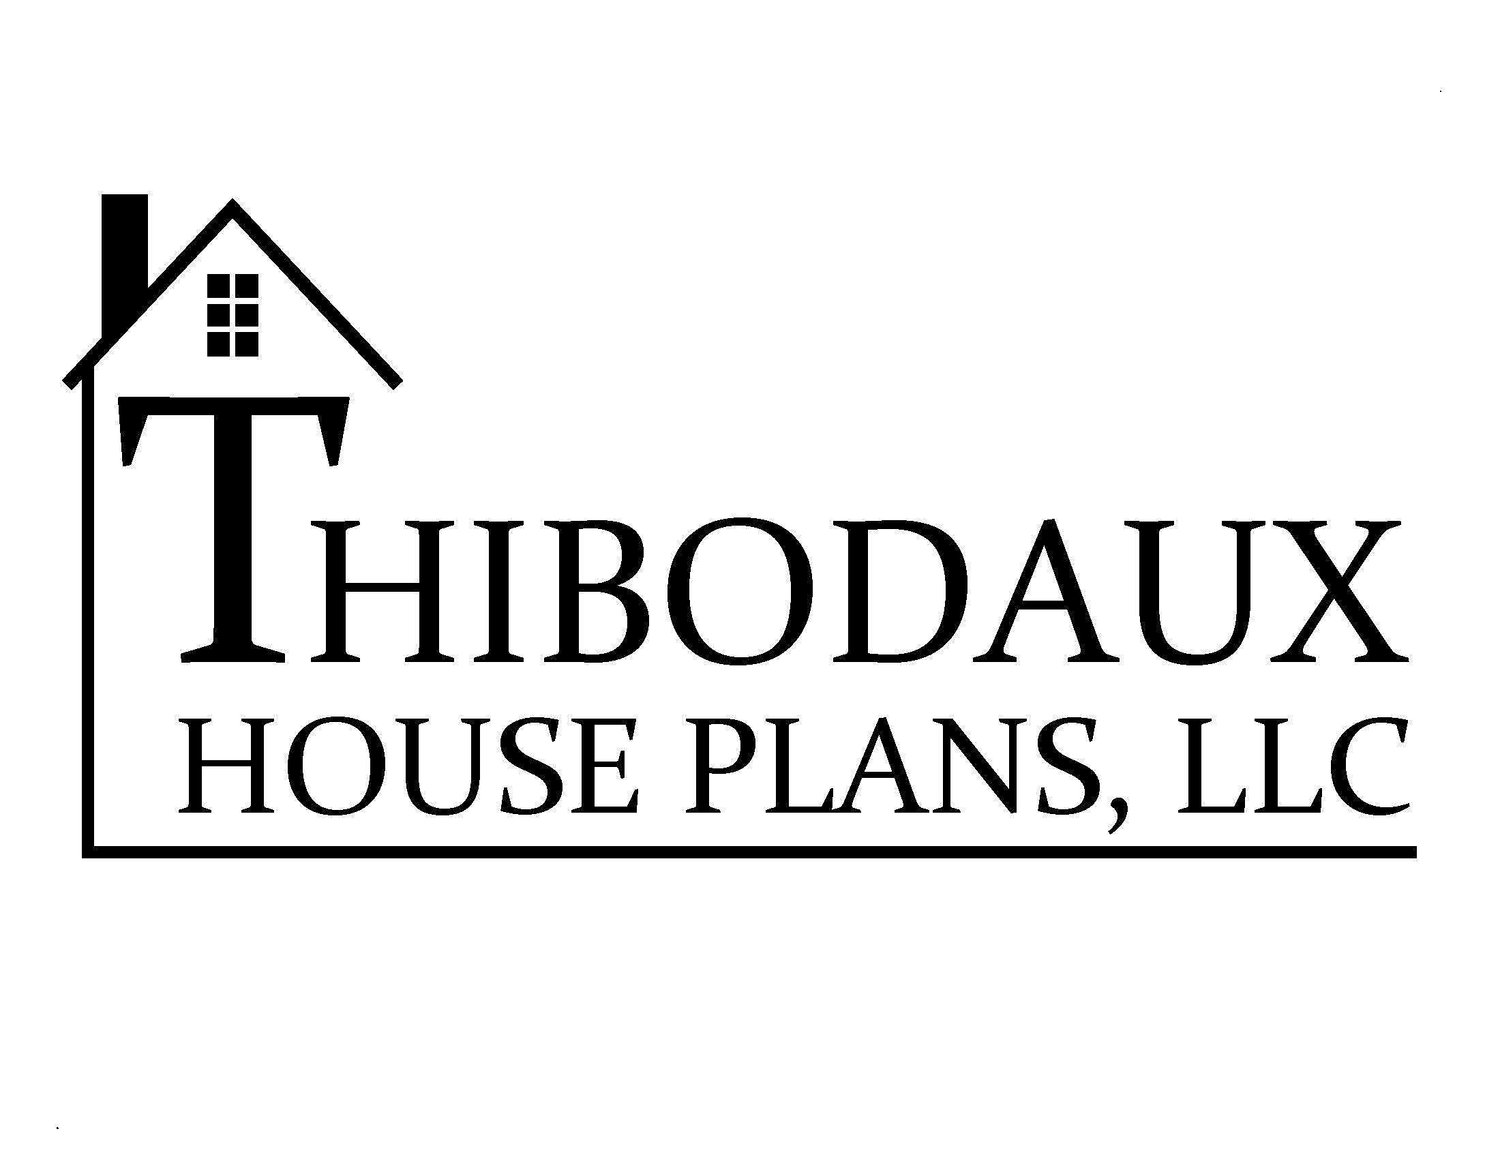 Thibodaux House Plans LLC